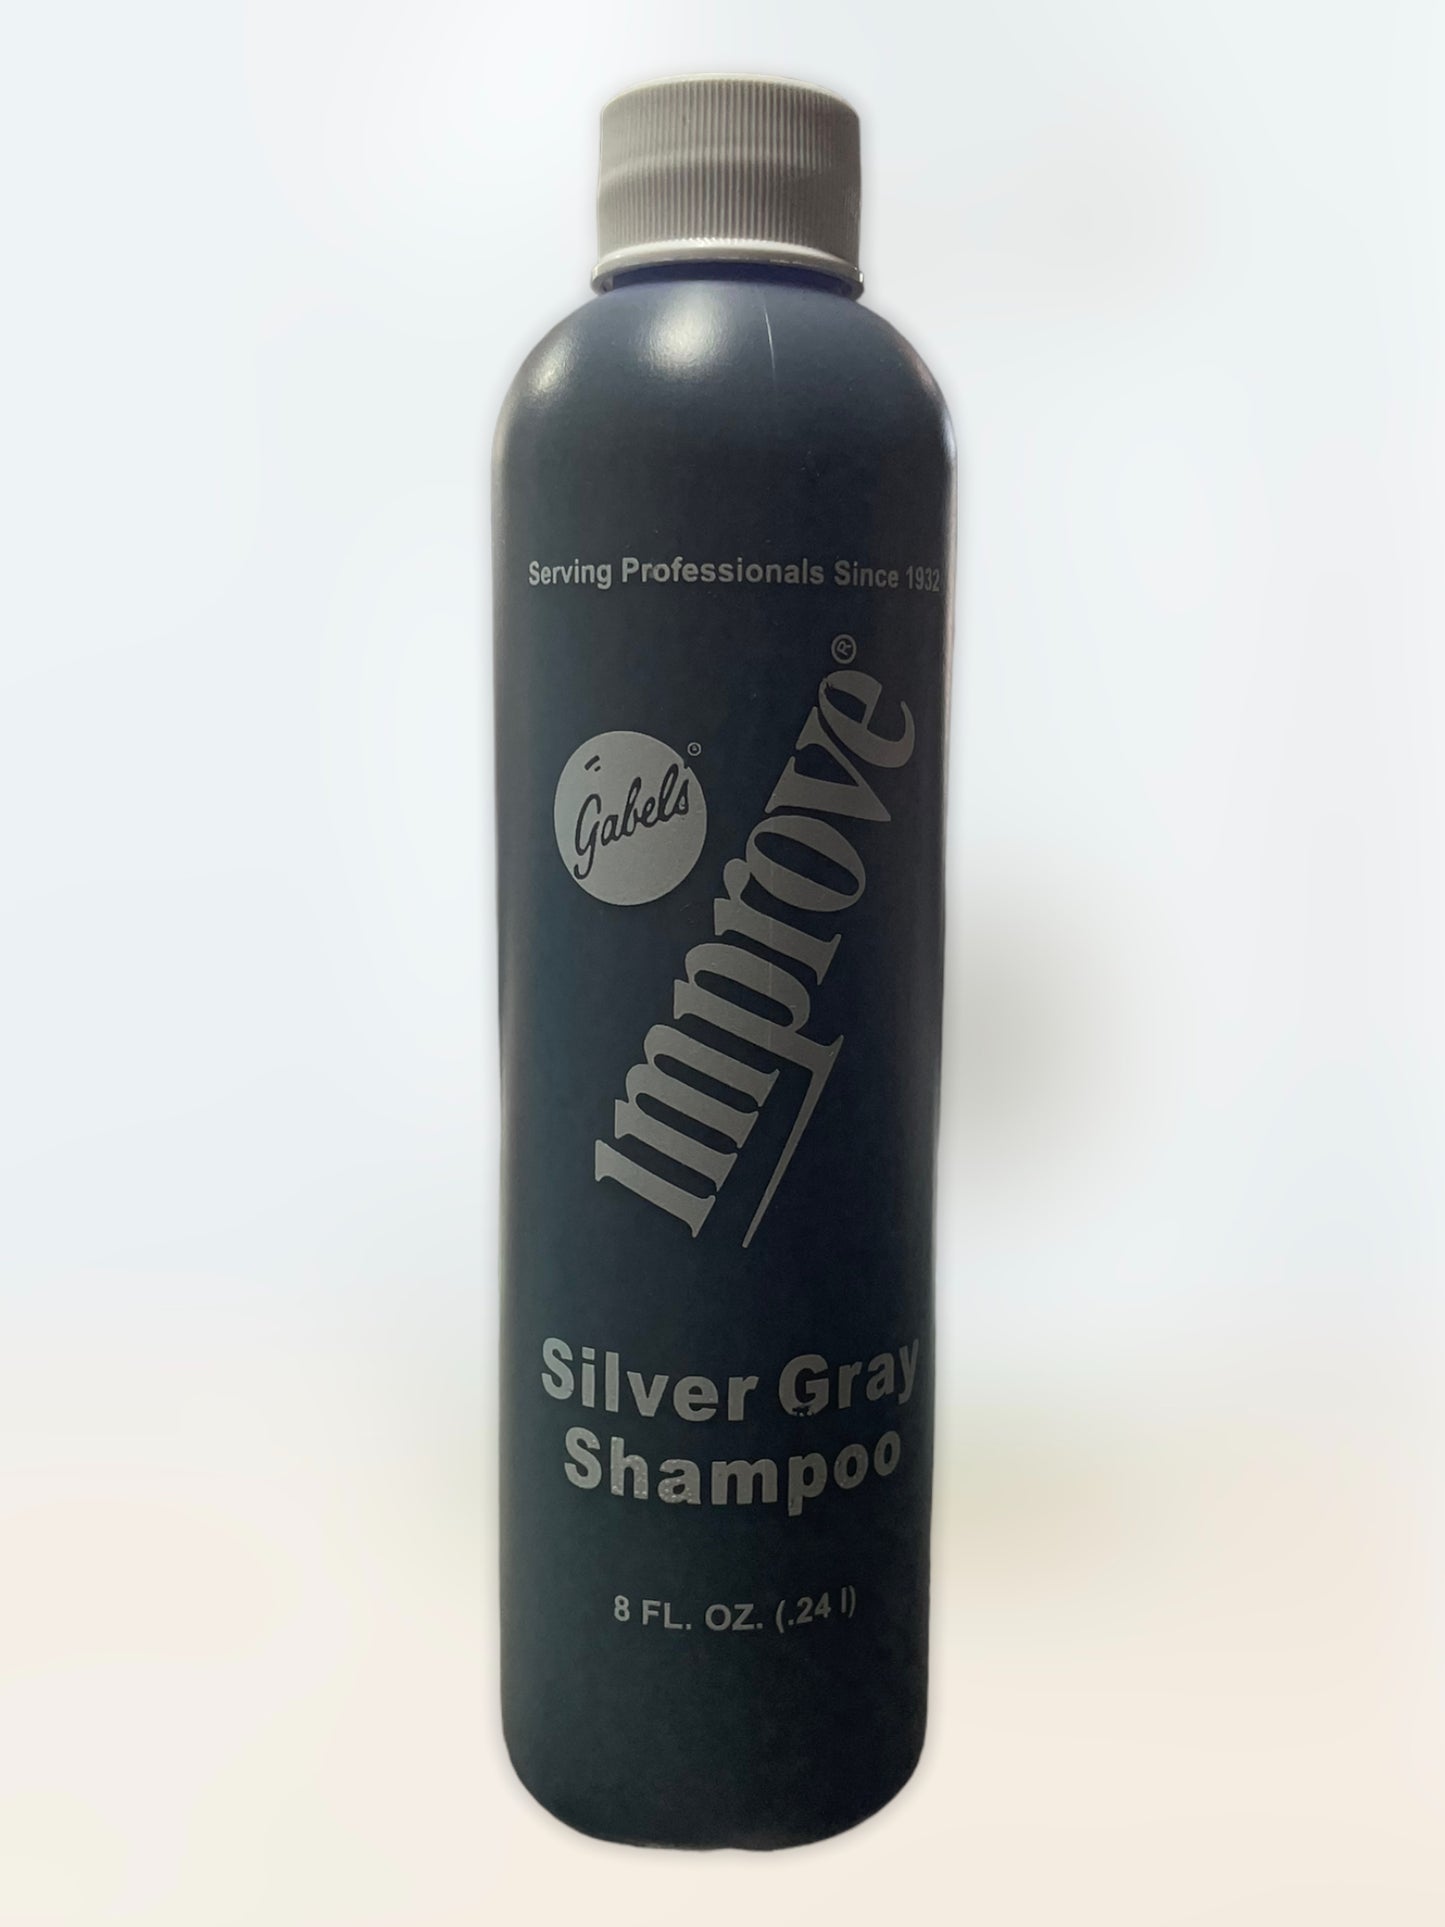 Gabel's Improve Silver Gray Shampoo